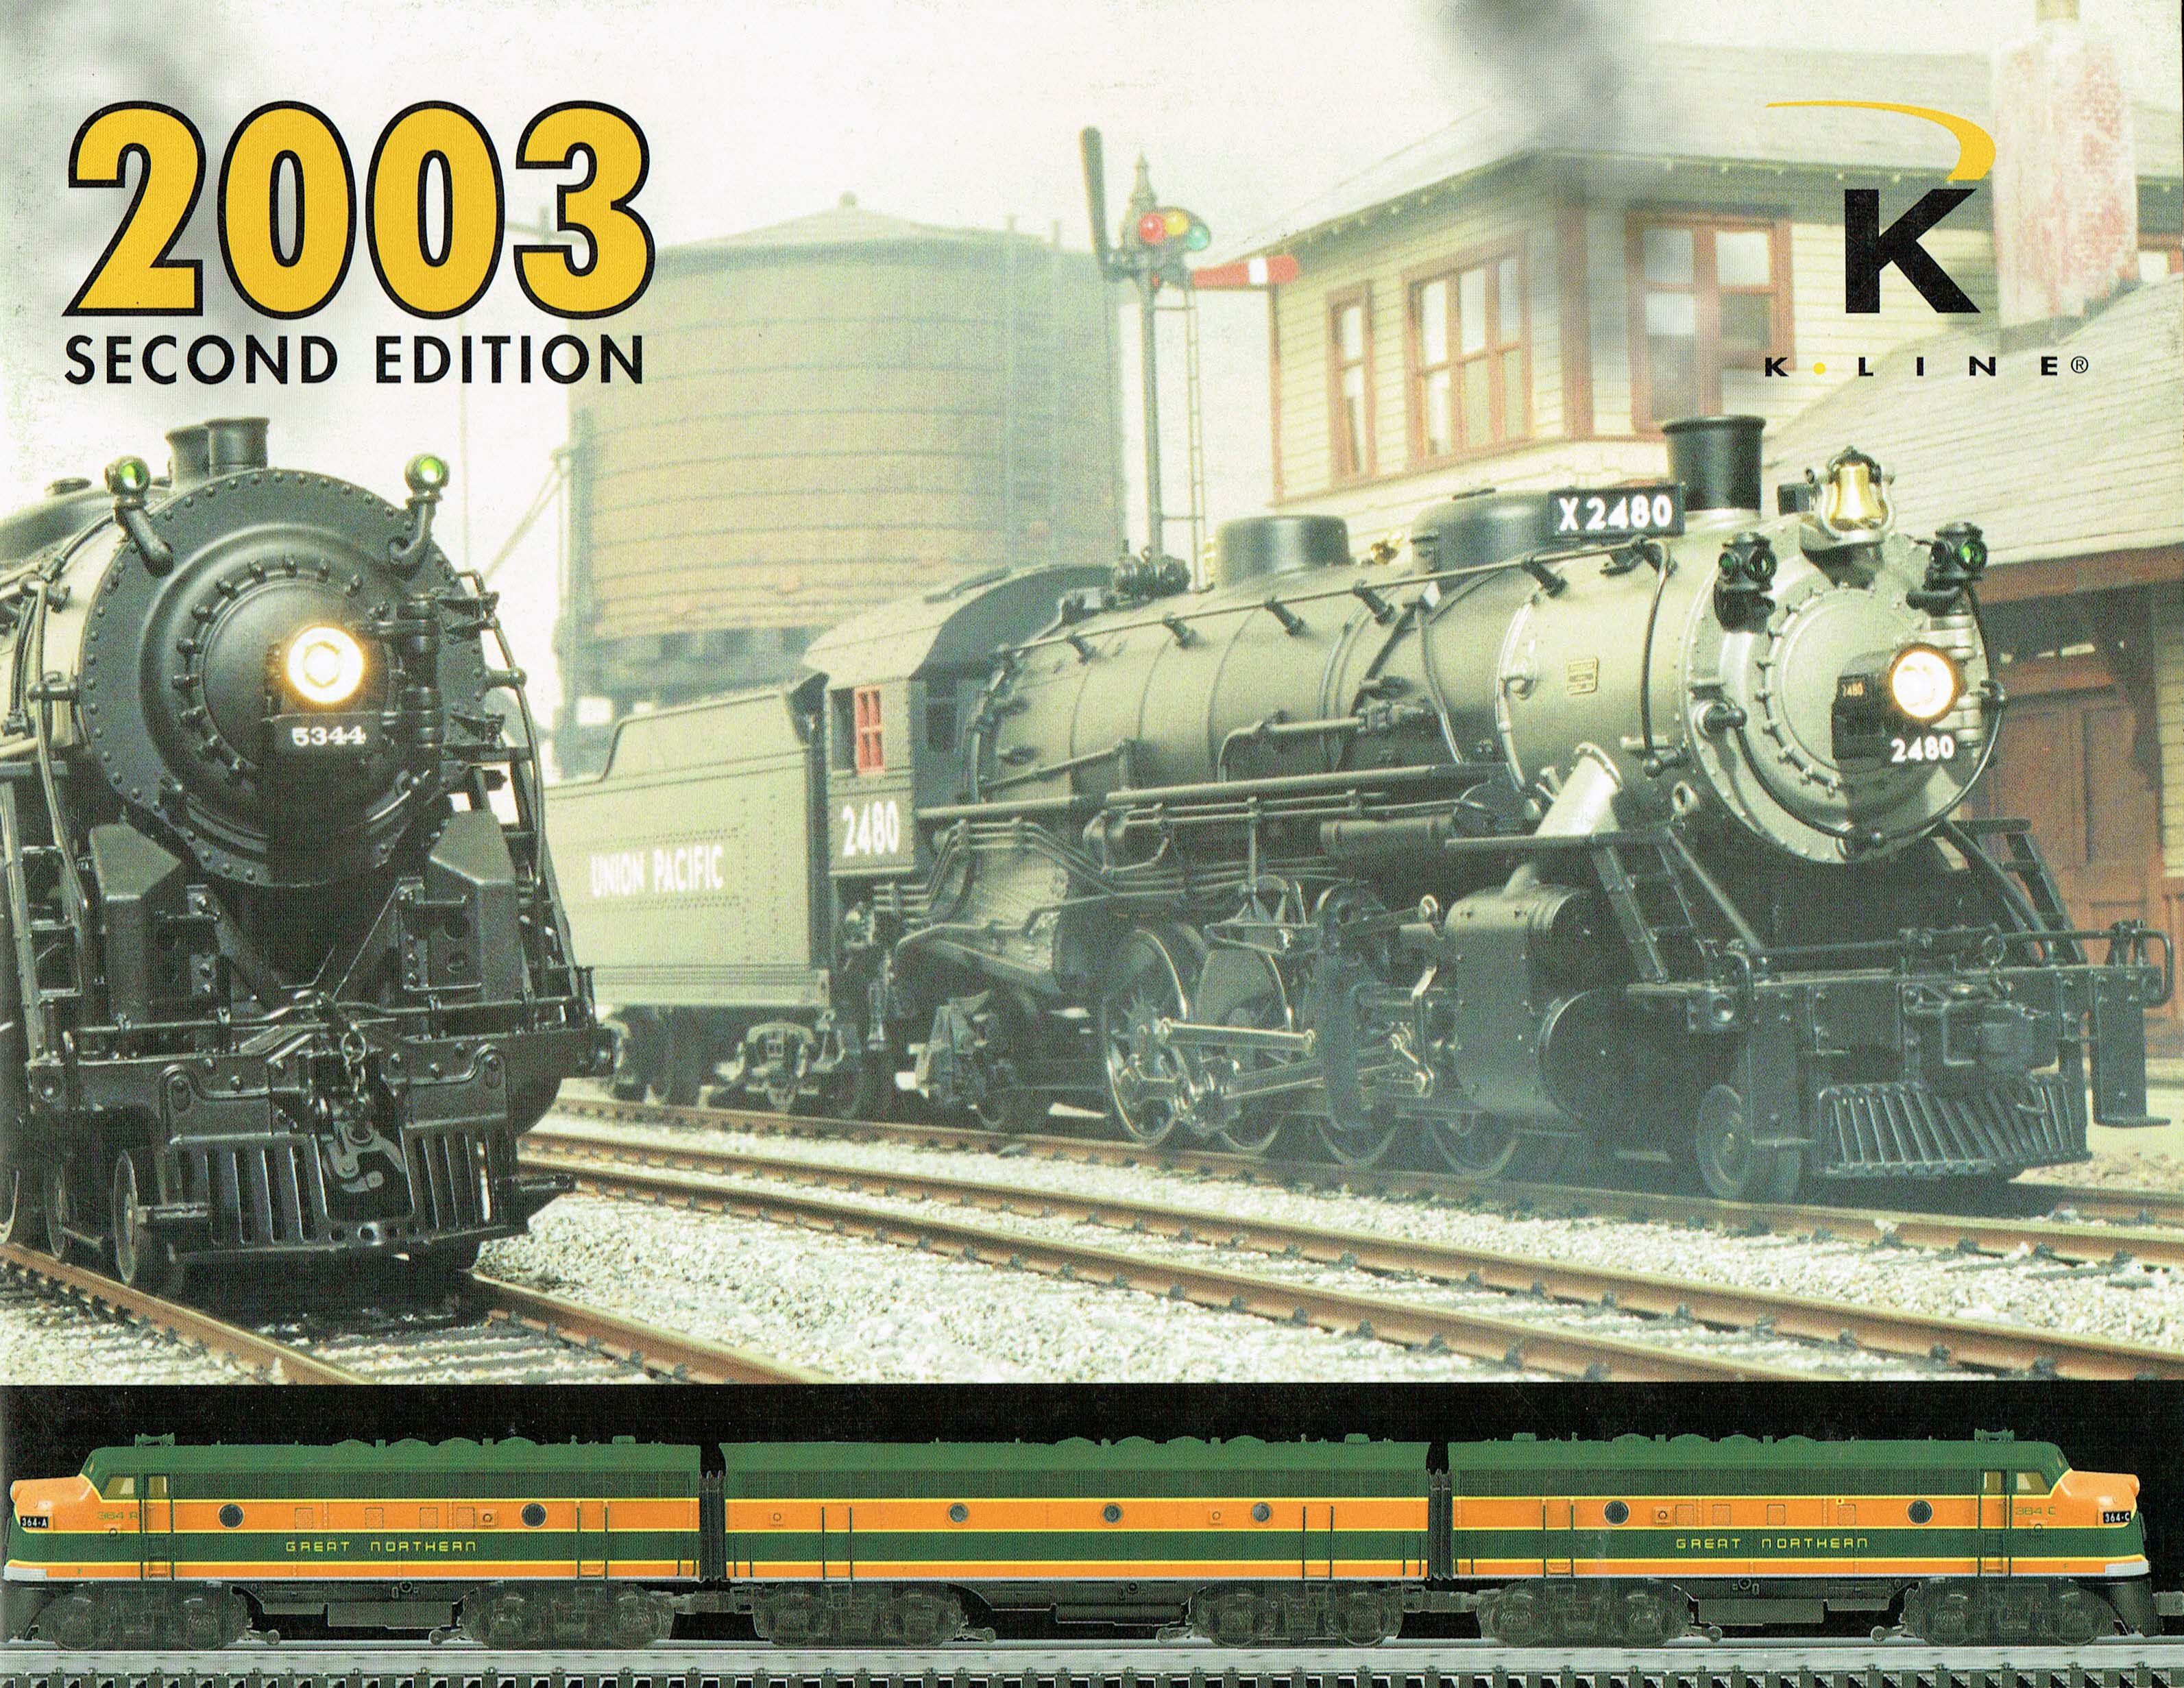 K-Line 2003 Second Edition Catalog image